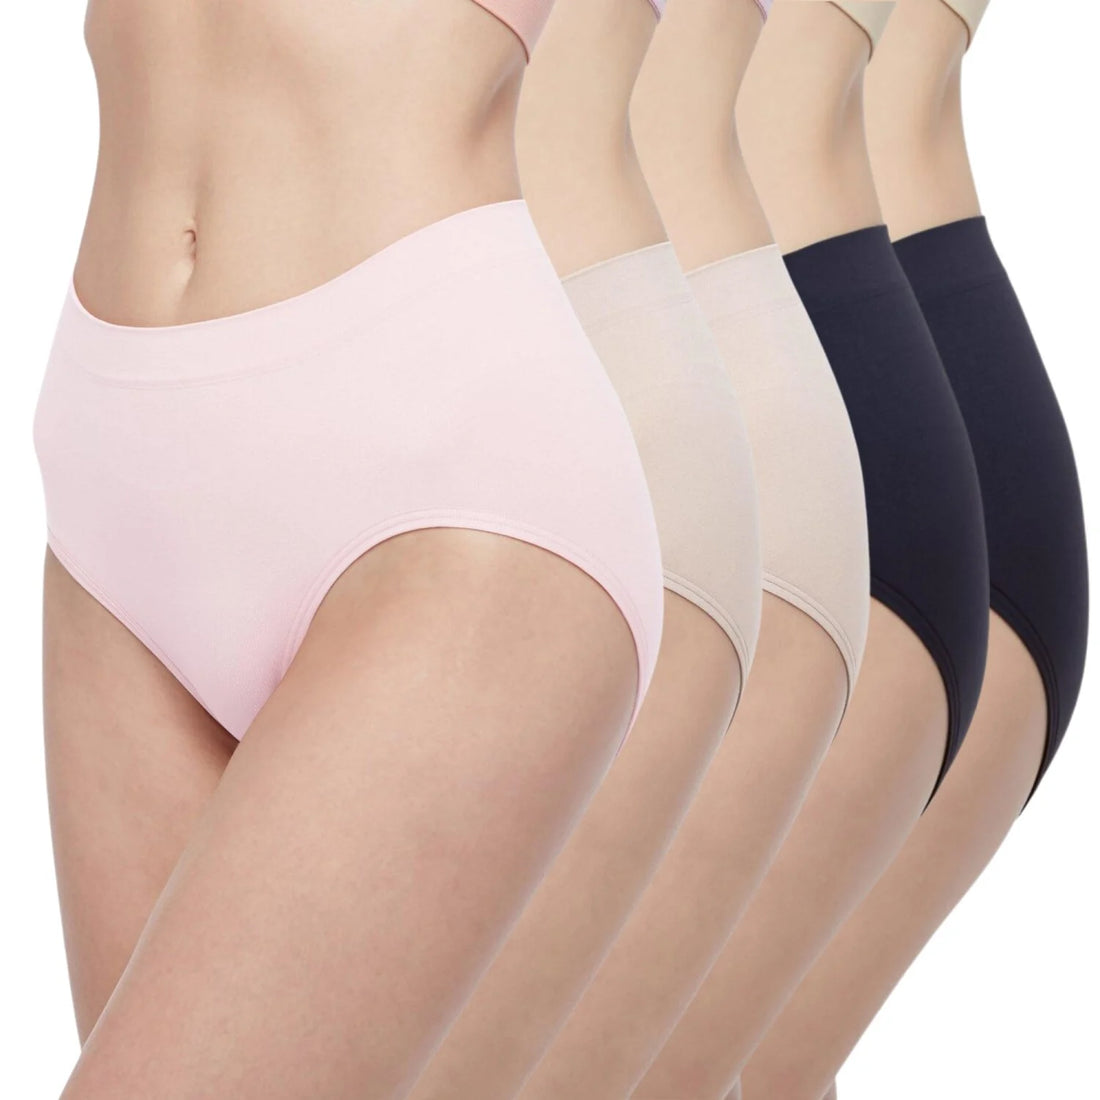 Wacoal Panty pack, comfortable underwear Full figure set, 5 pieces, model  WU4F34, assorted colors (beige-black-carnation pink-gray-burnt brown)